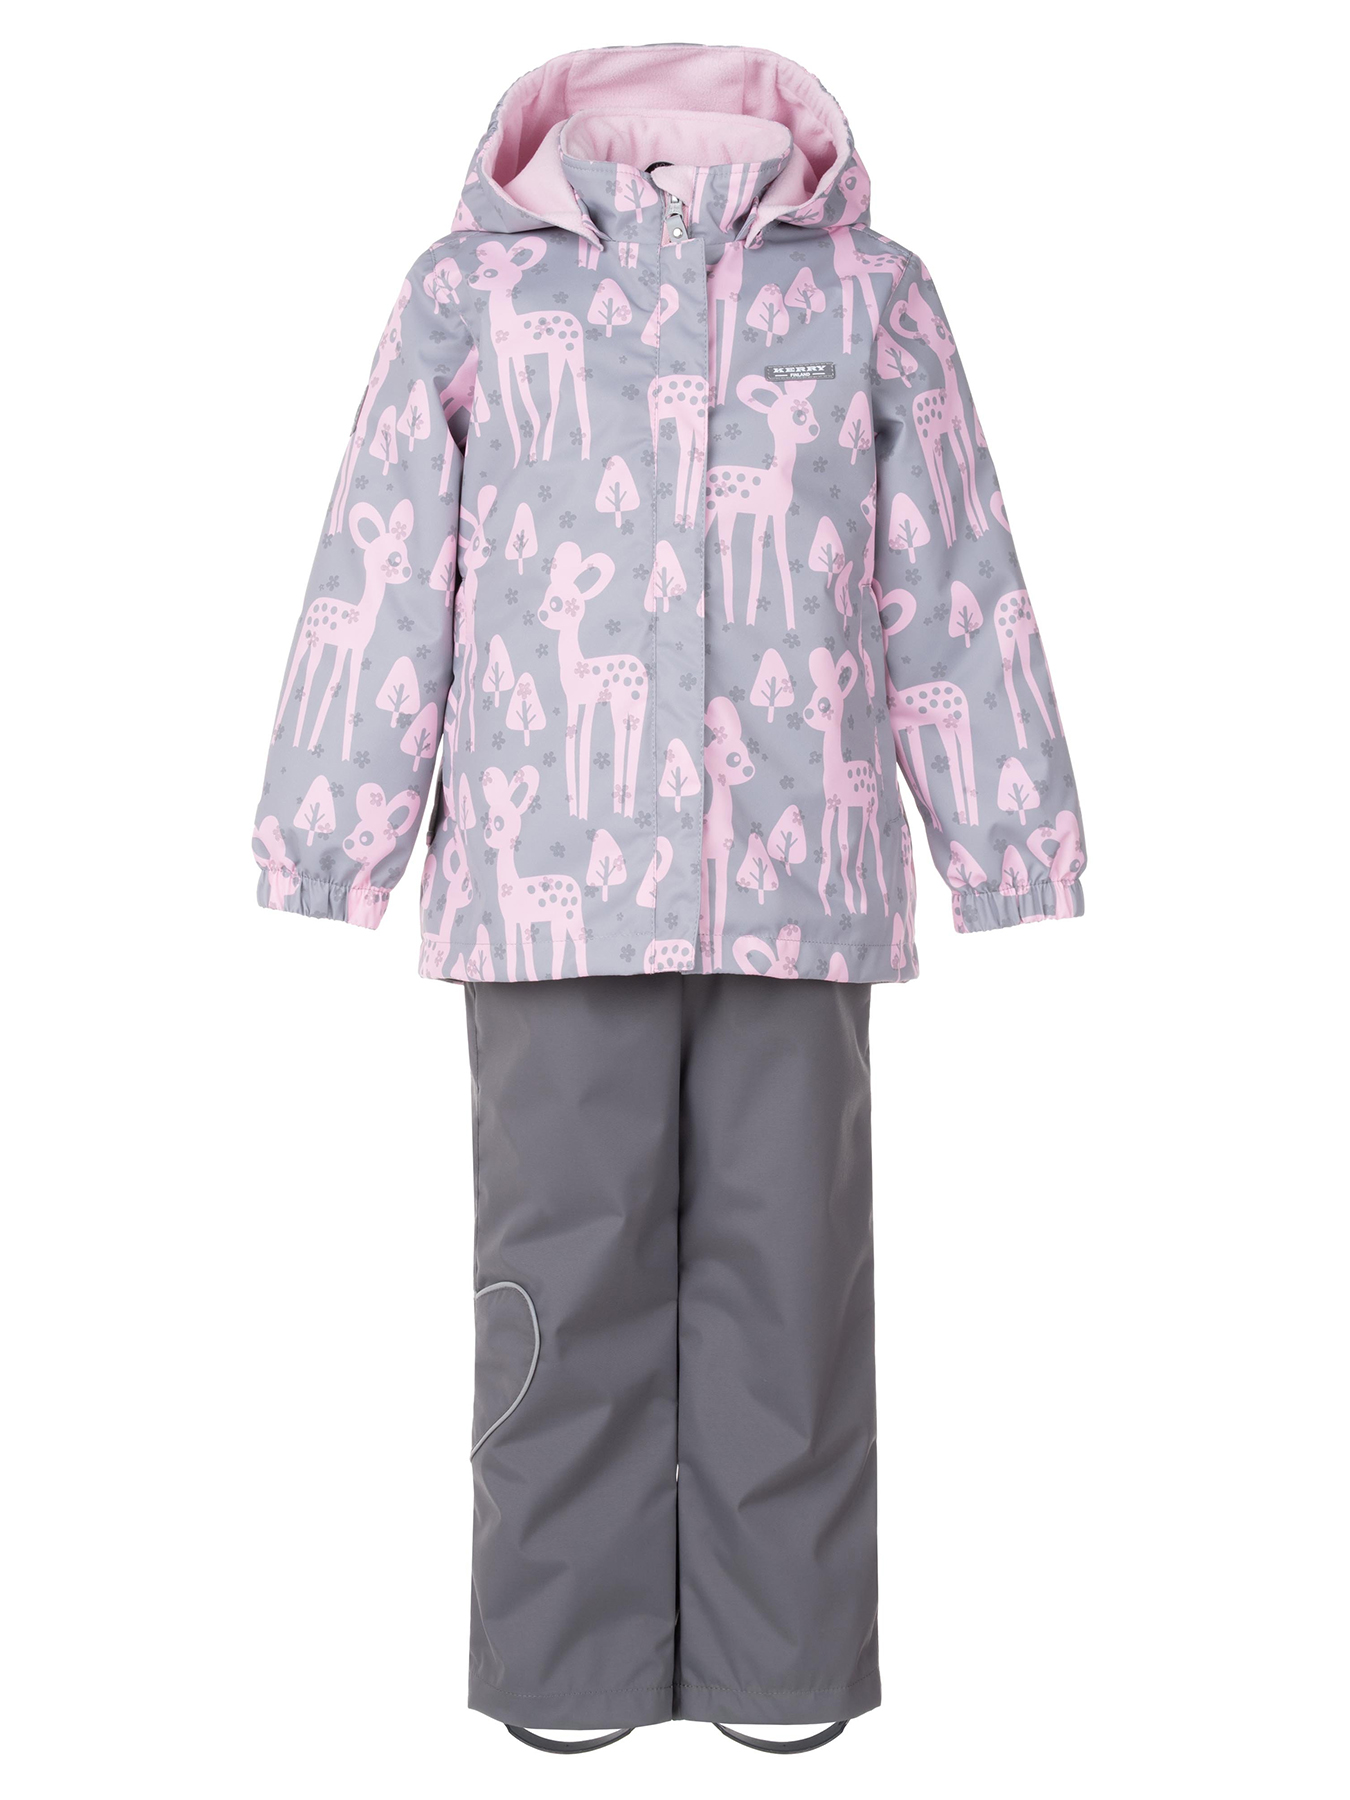 Комплект верхней одежды KERRY LISETTE K24031, 3700-светло-розовый,серый, 128